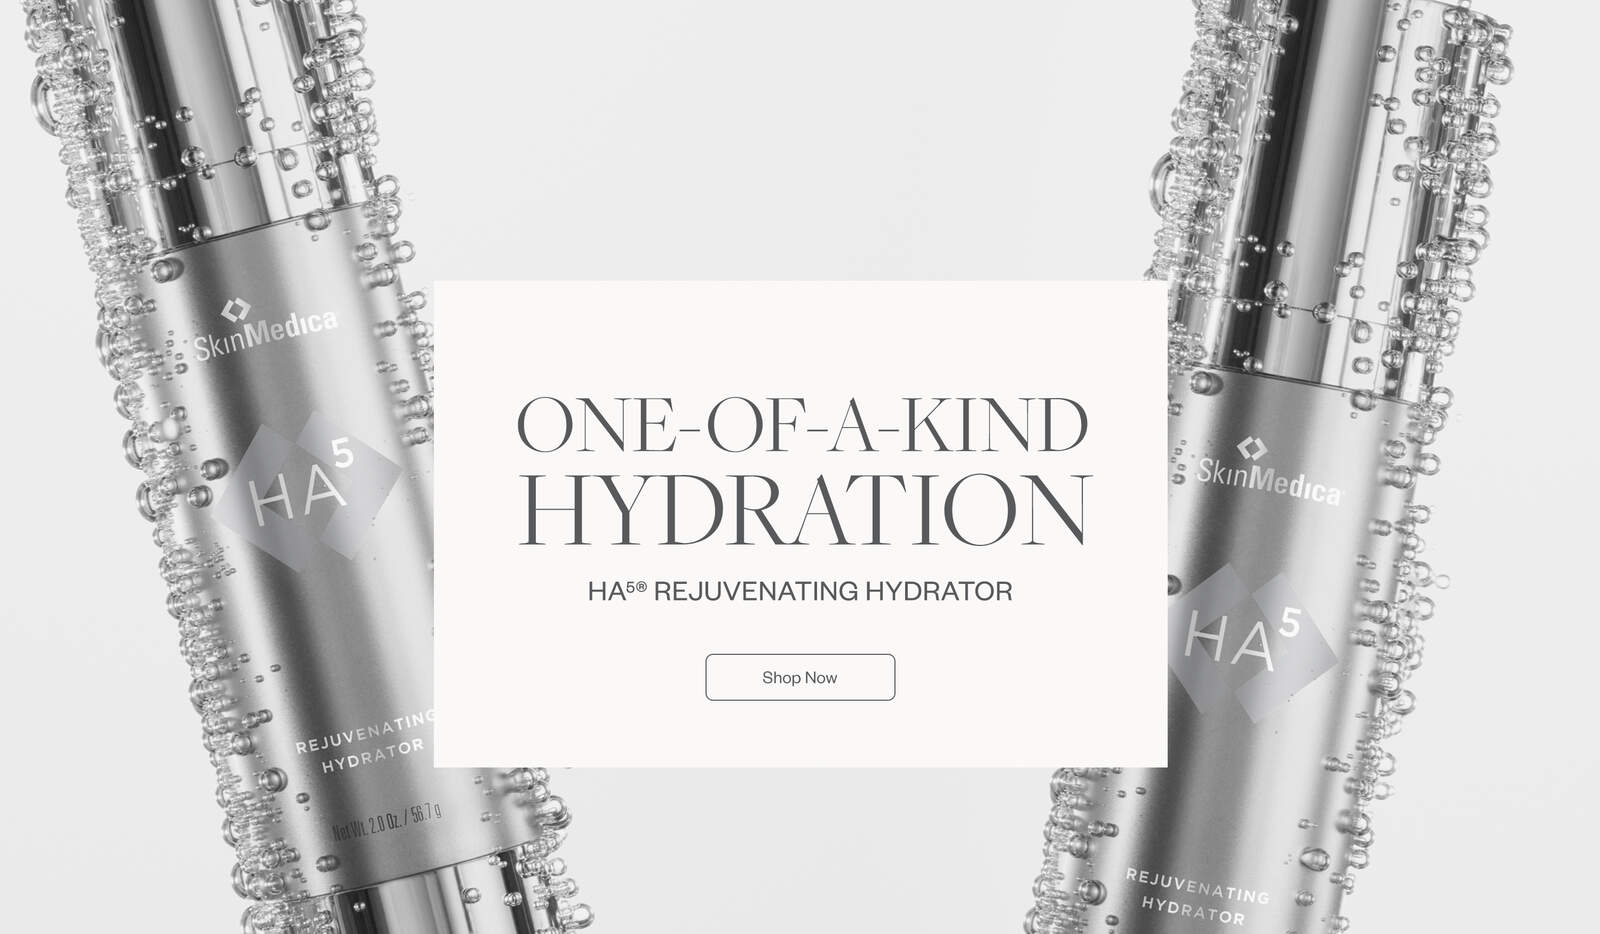 One of a kind hydration HA5 Rejuvenating Hydrator